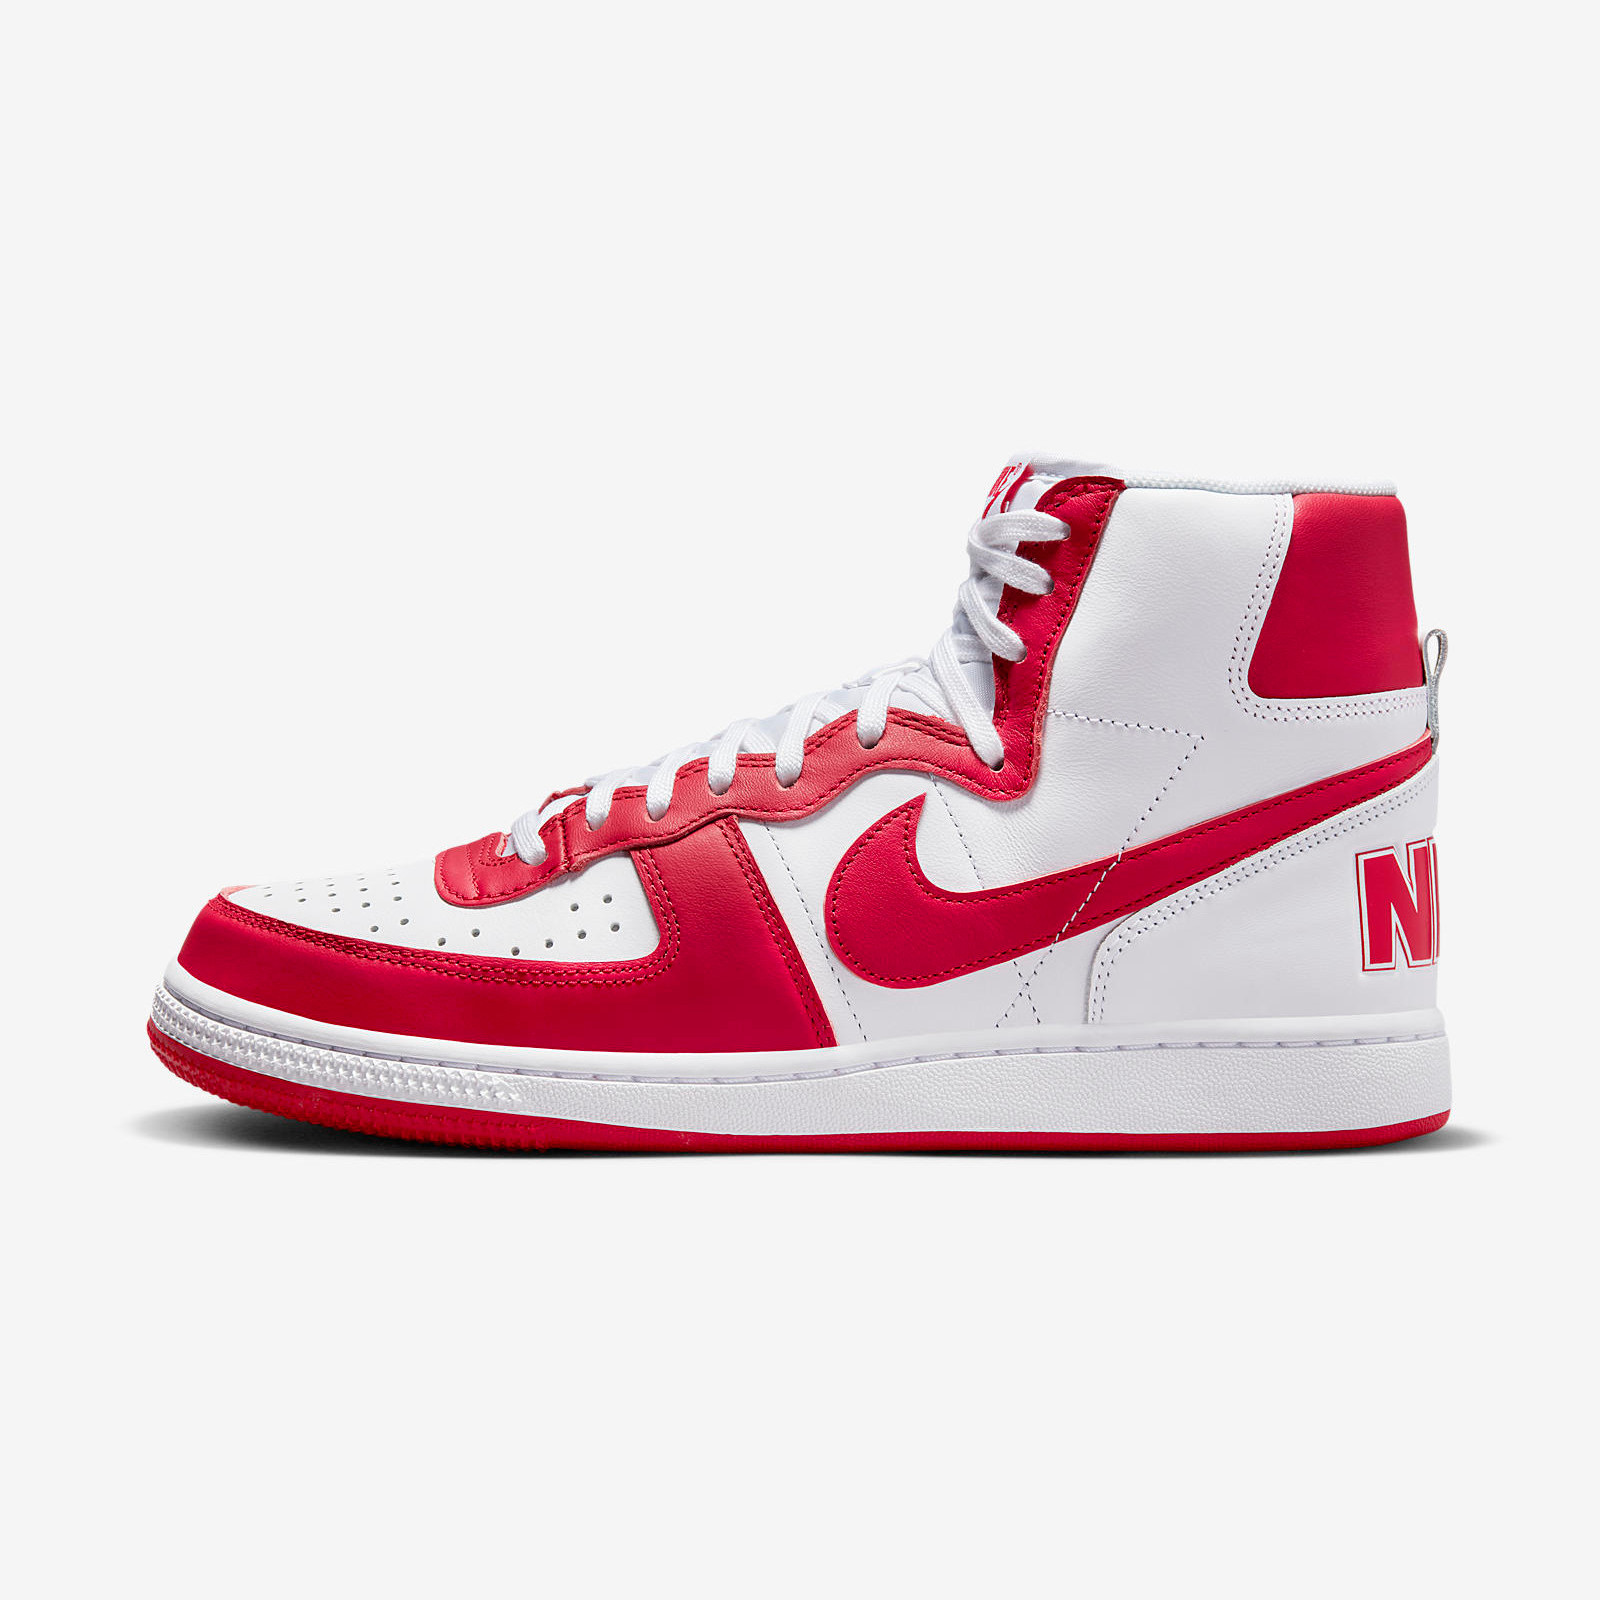 Nike Terminator High
Red / White